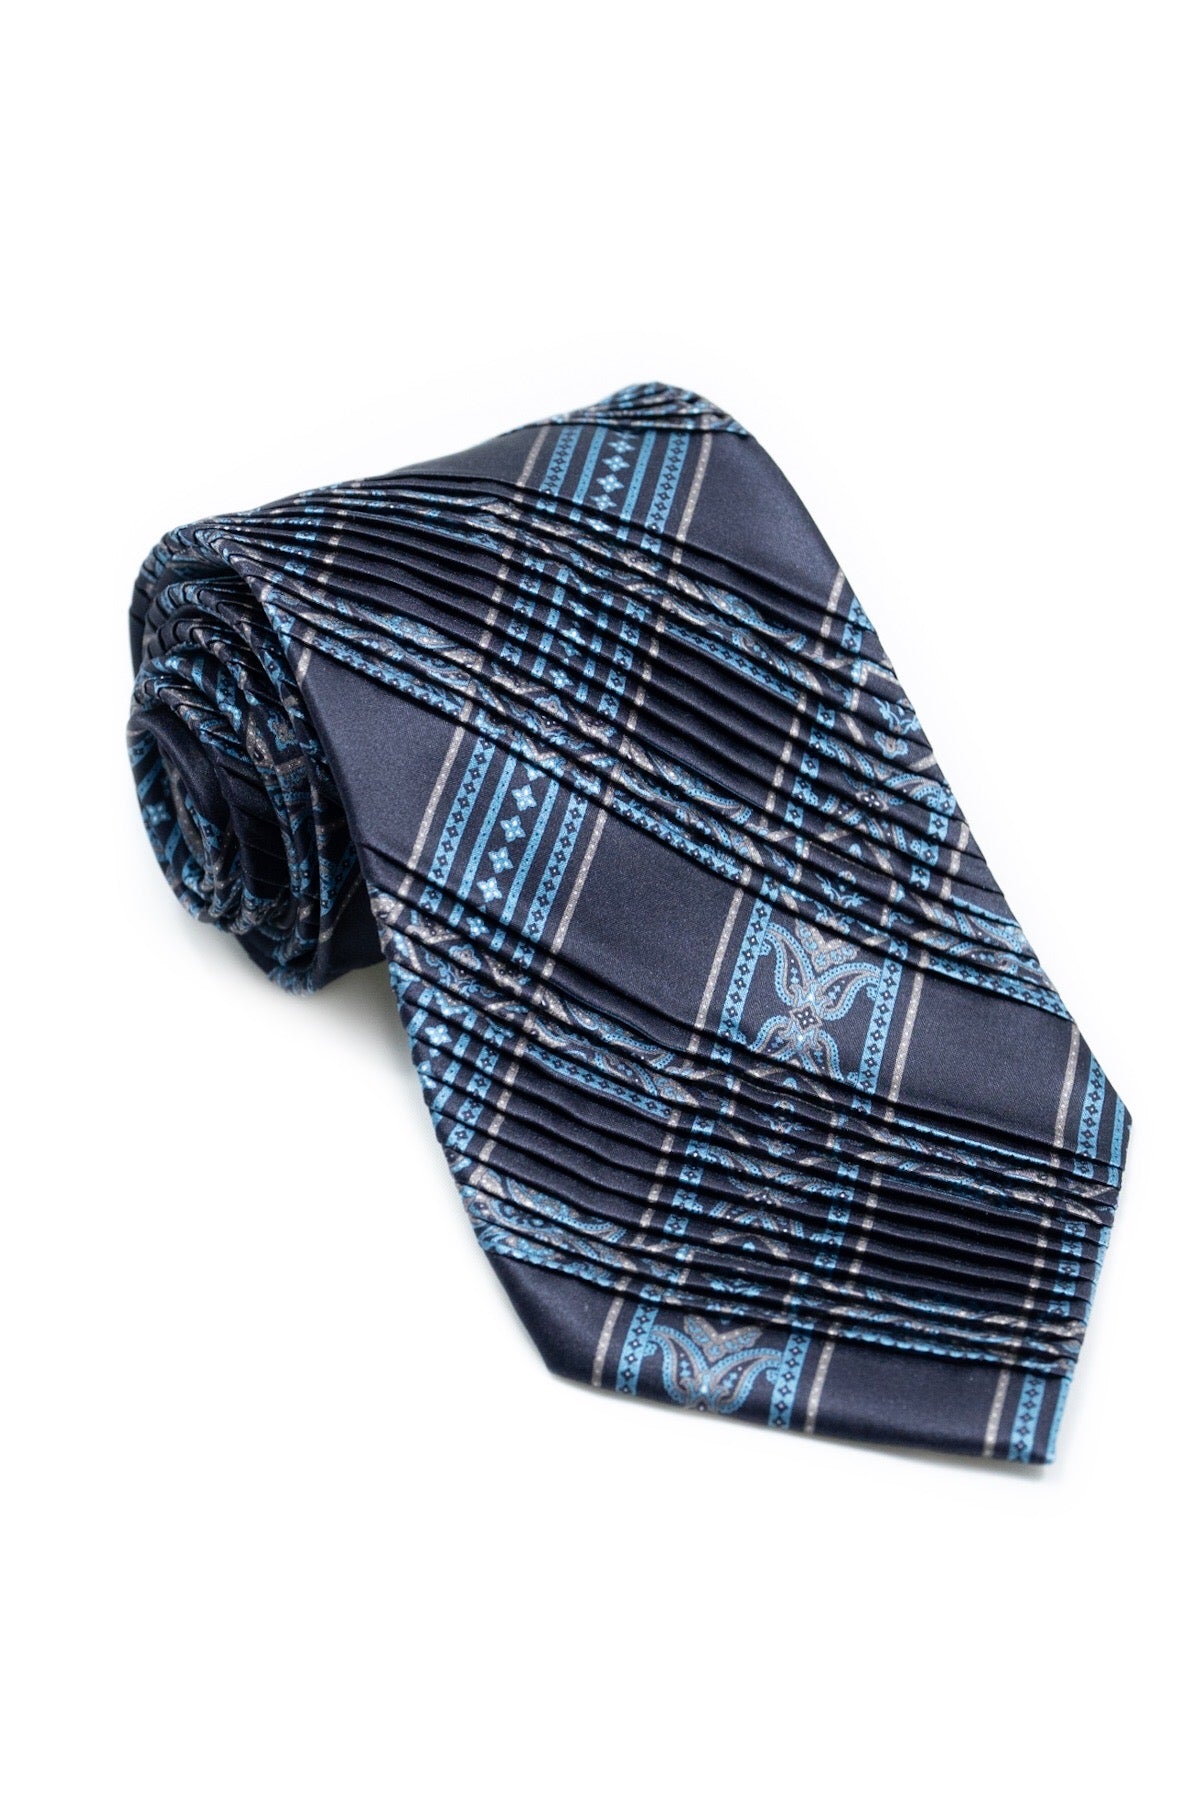 STEFANO RICCI Pleats Tie  black × blue gray